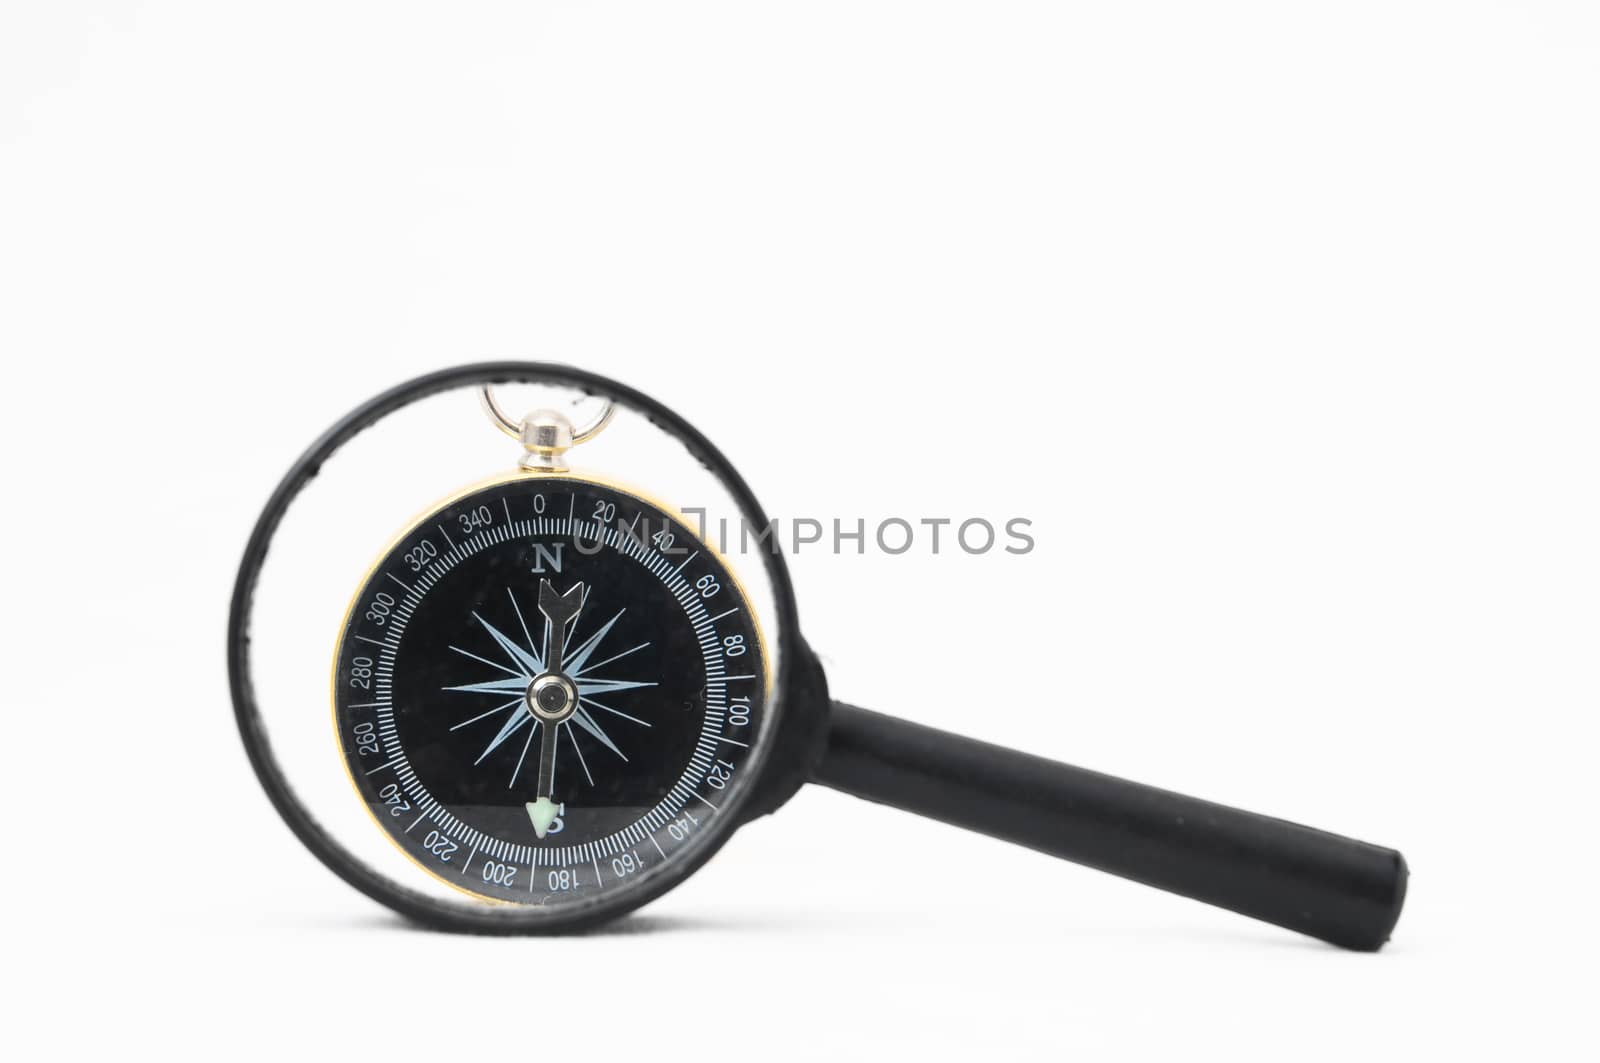 Analogic Compass by underworld